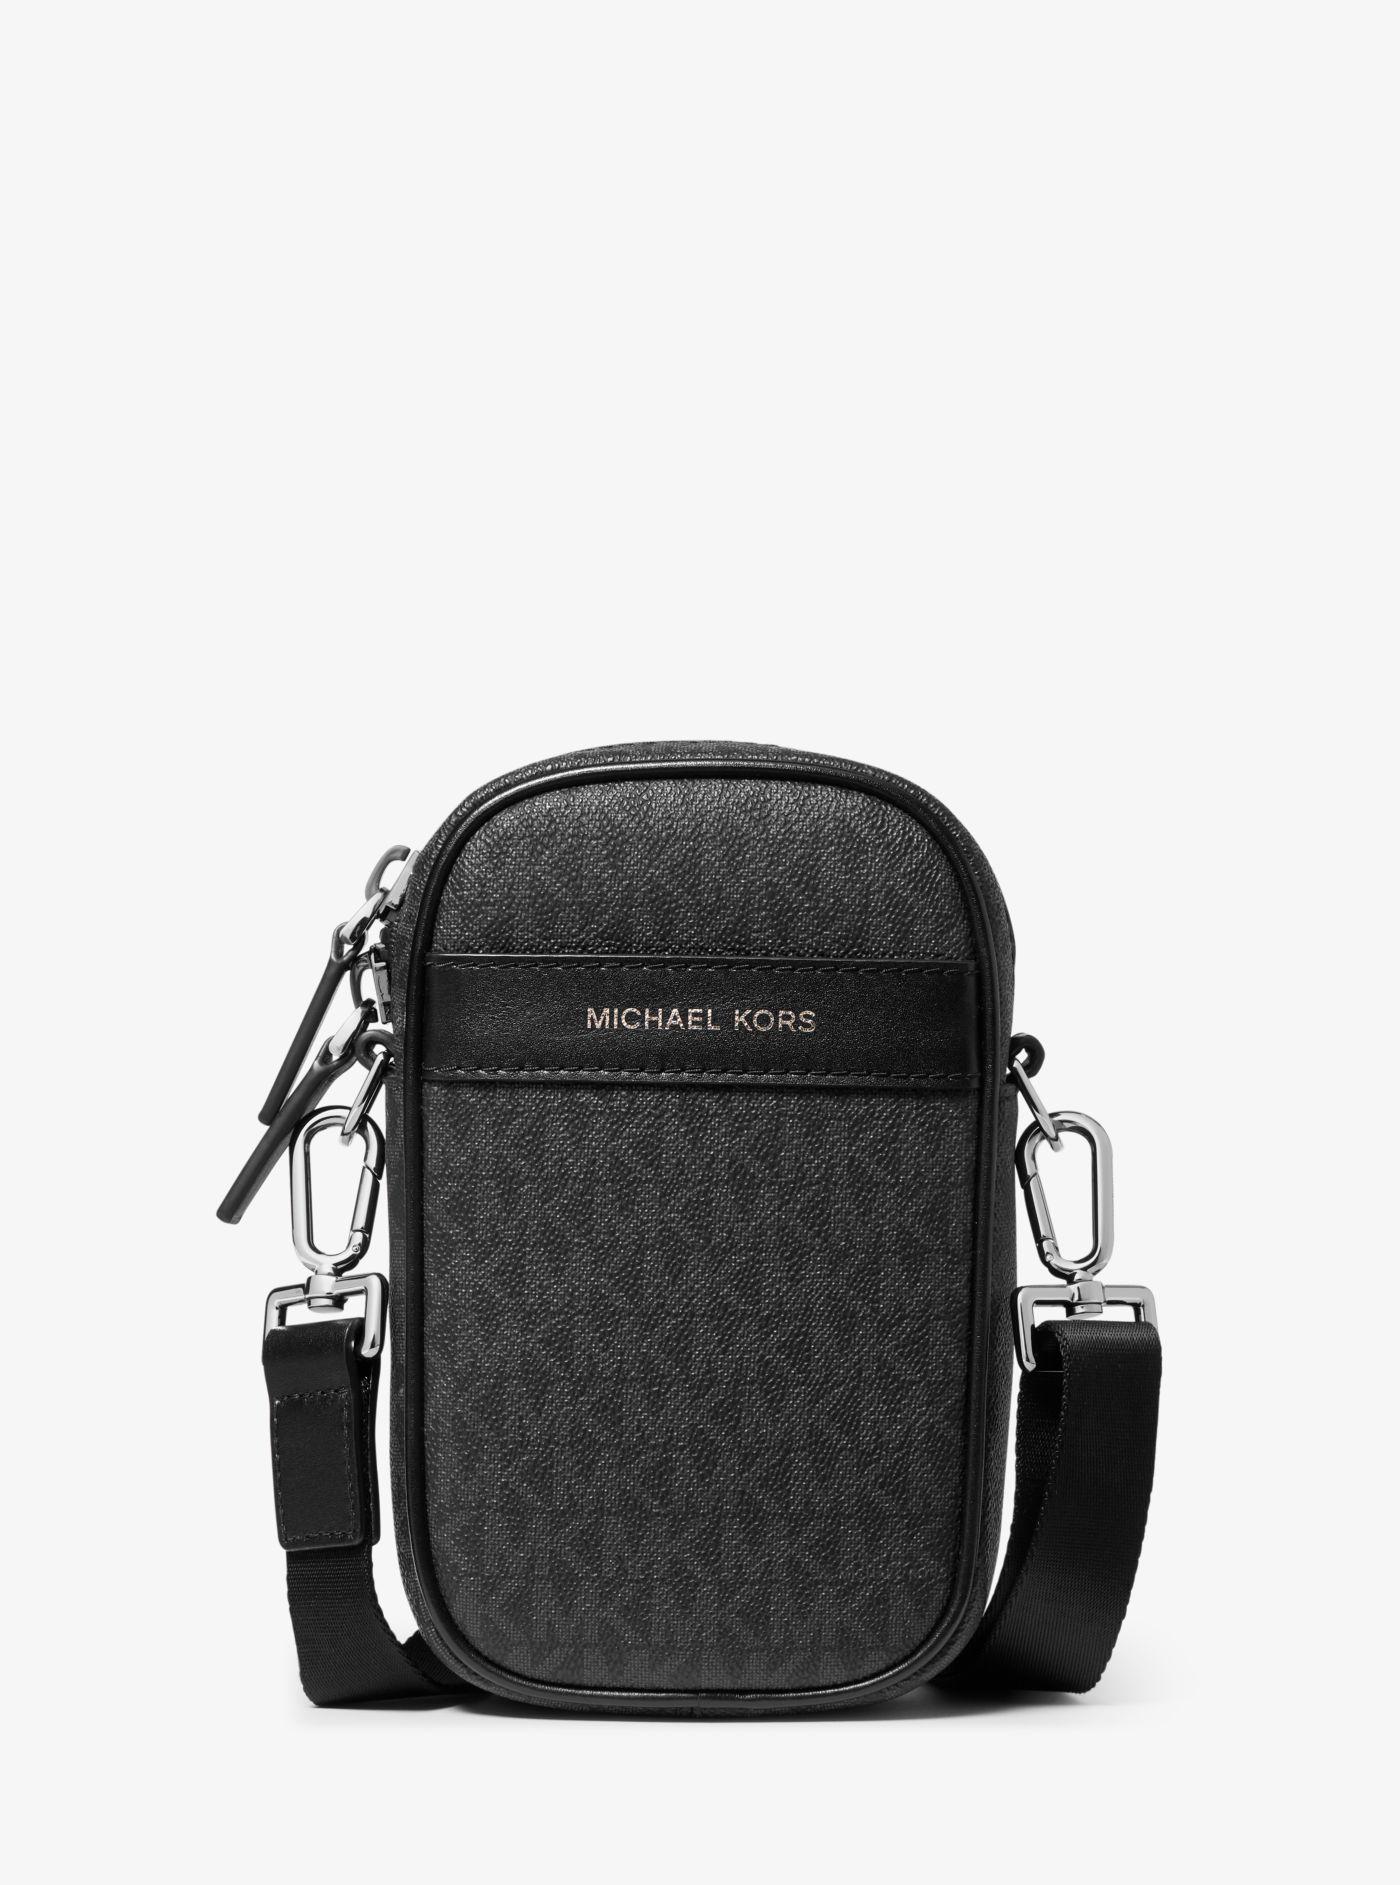 Michael Kors Greyson Logo Smartphone Crossbody Bag in Black for 